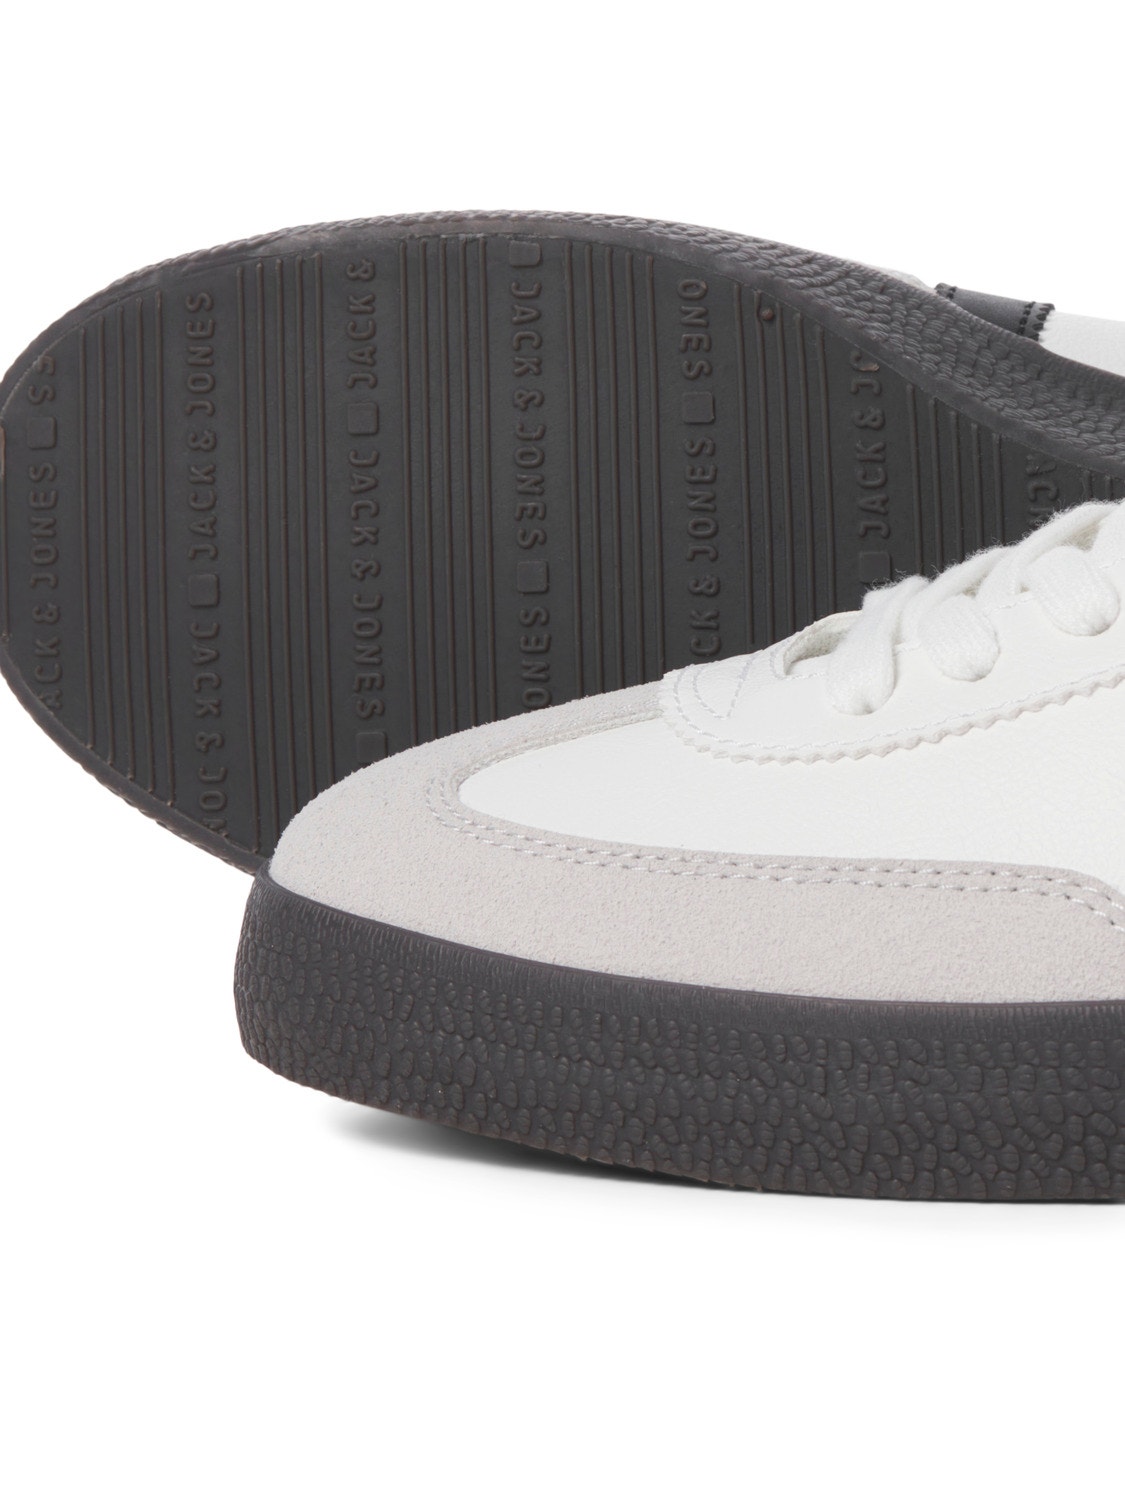 Jack & Jones Gummi Sneaker -Bright White - 12257190